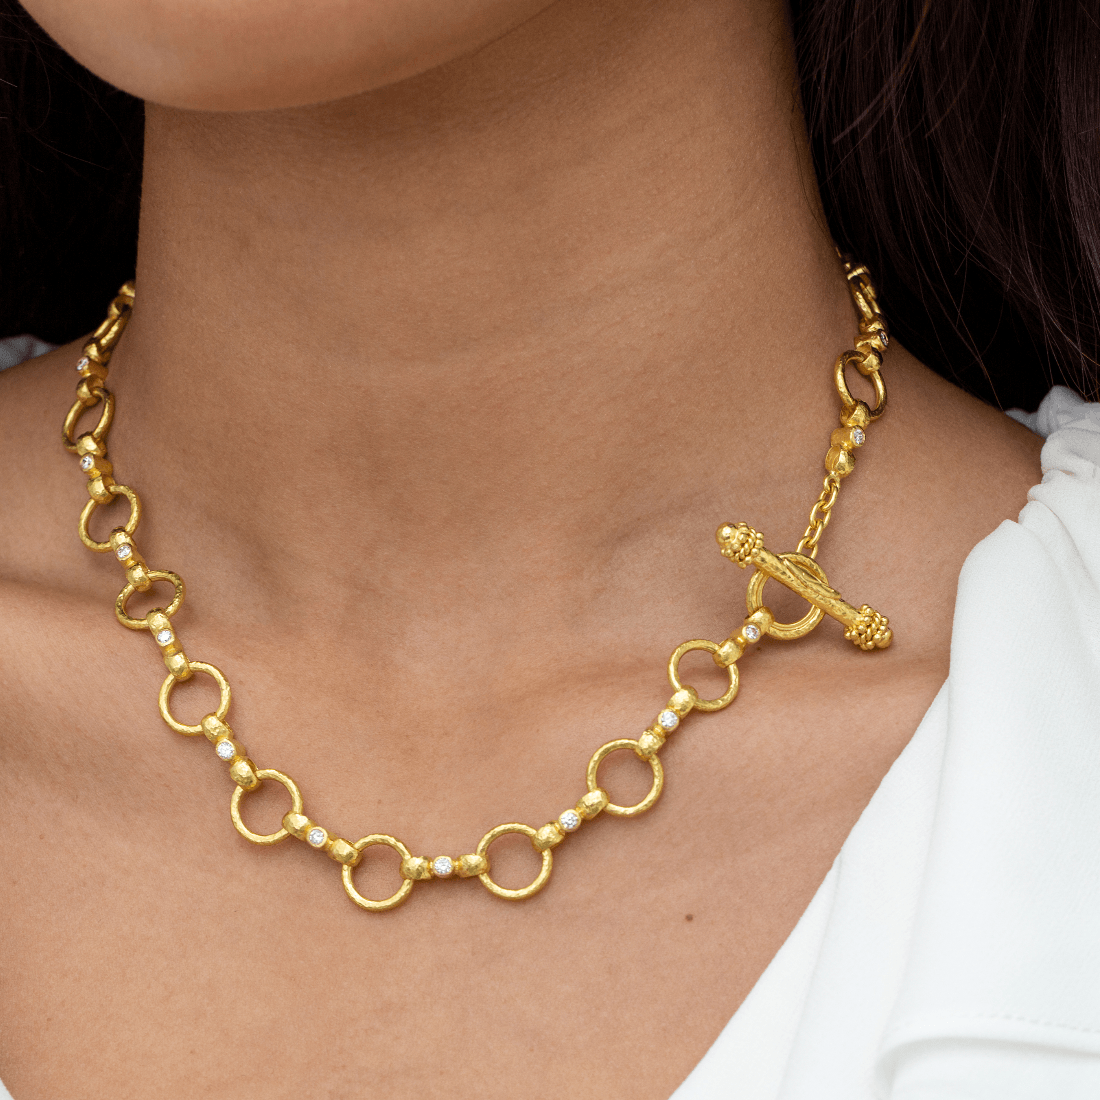 Elizabeth Locke Yellow Gold & Diamond Celtic Link Necklace
